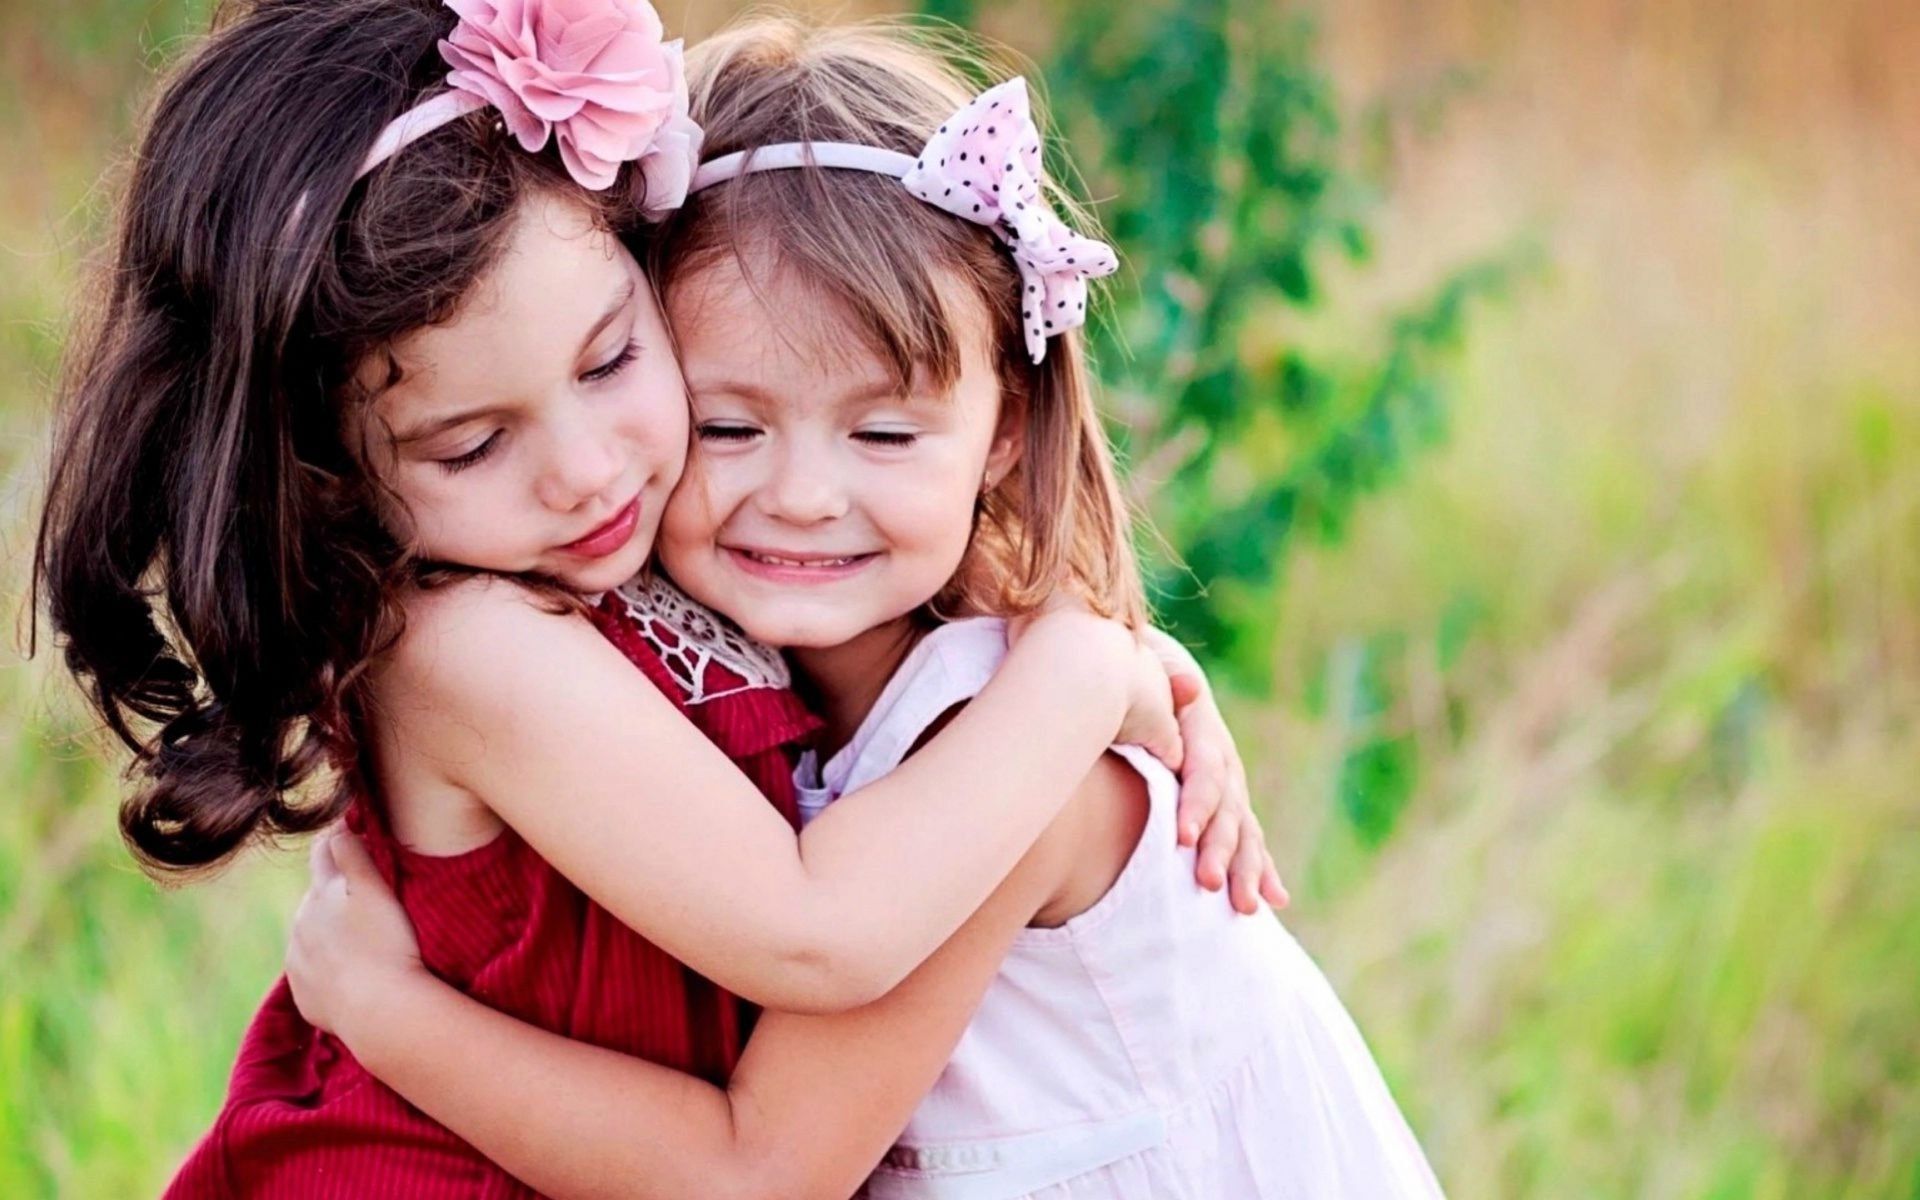 Cute little girls hug wallpaper | HD Wallpapers Rocks